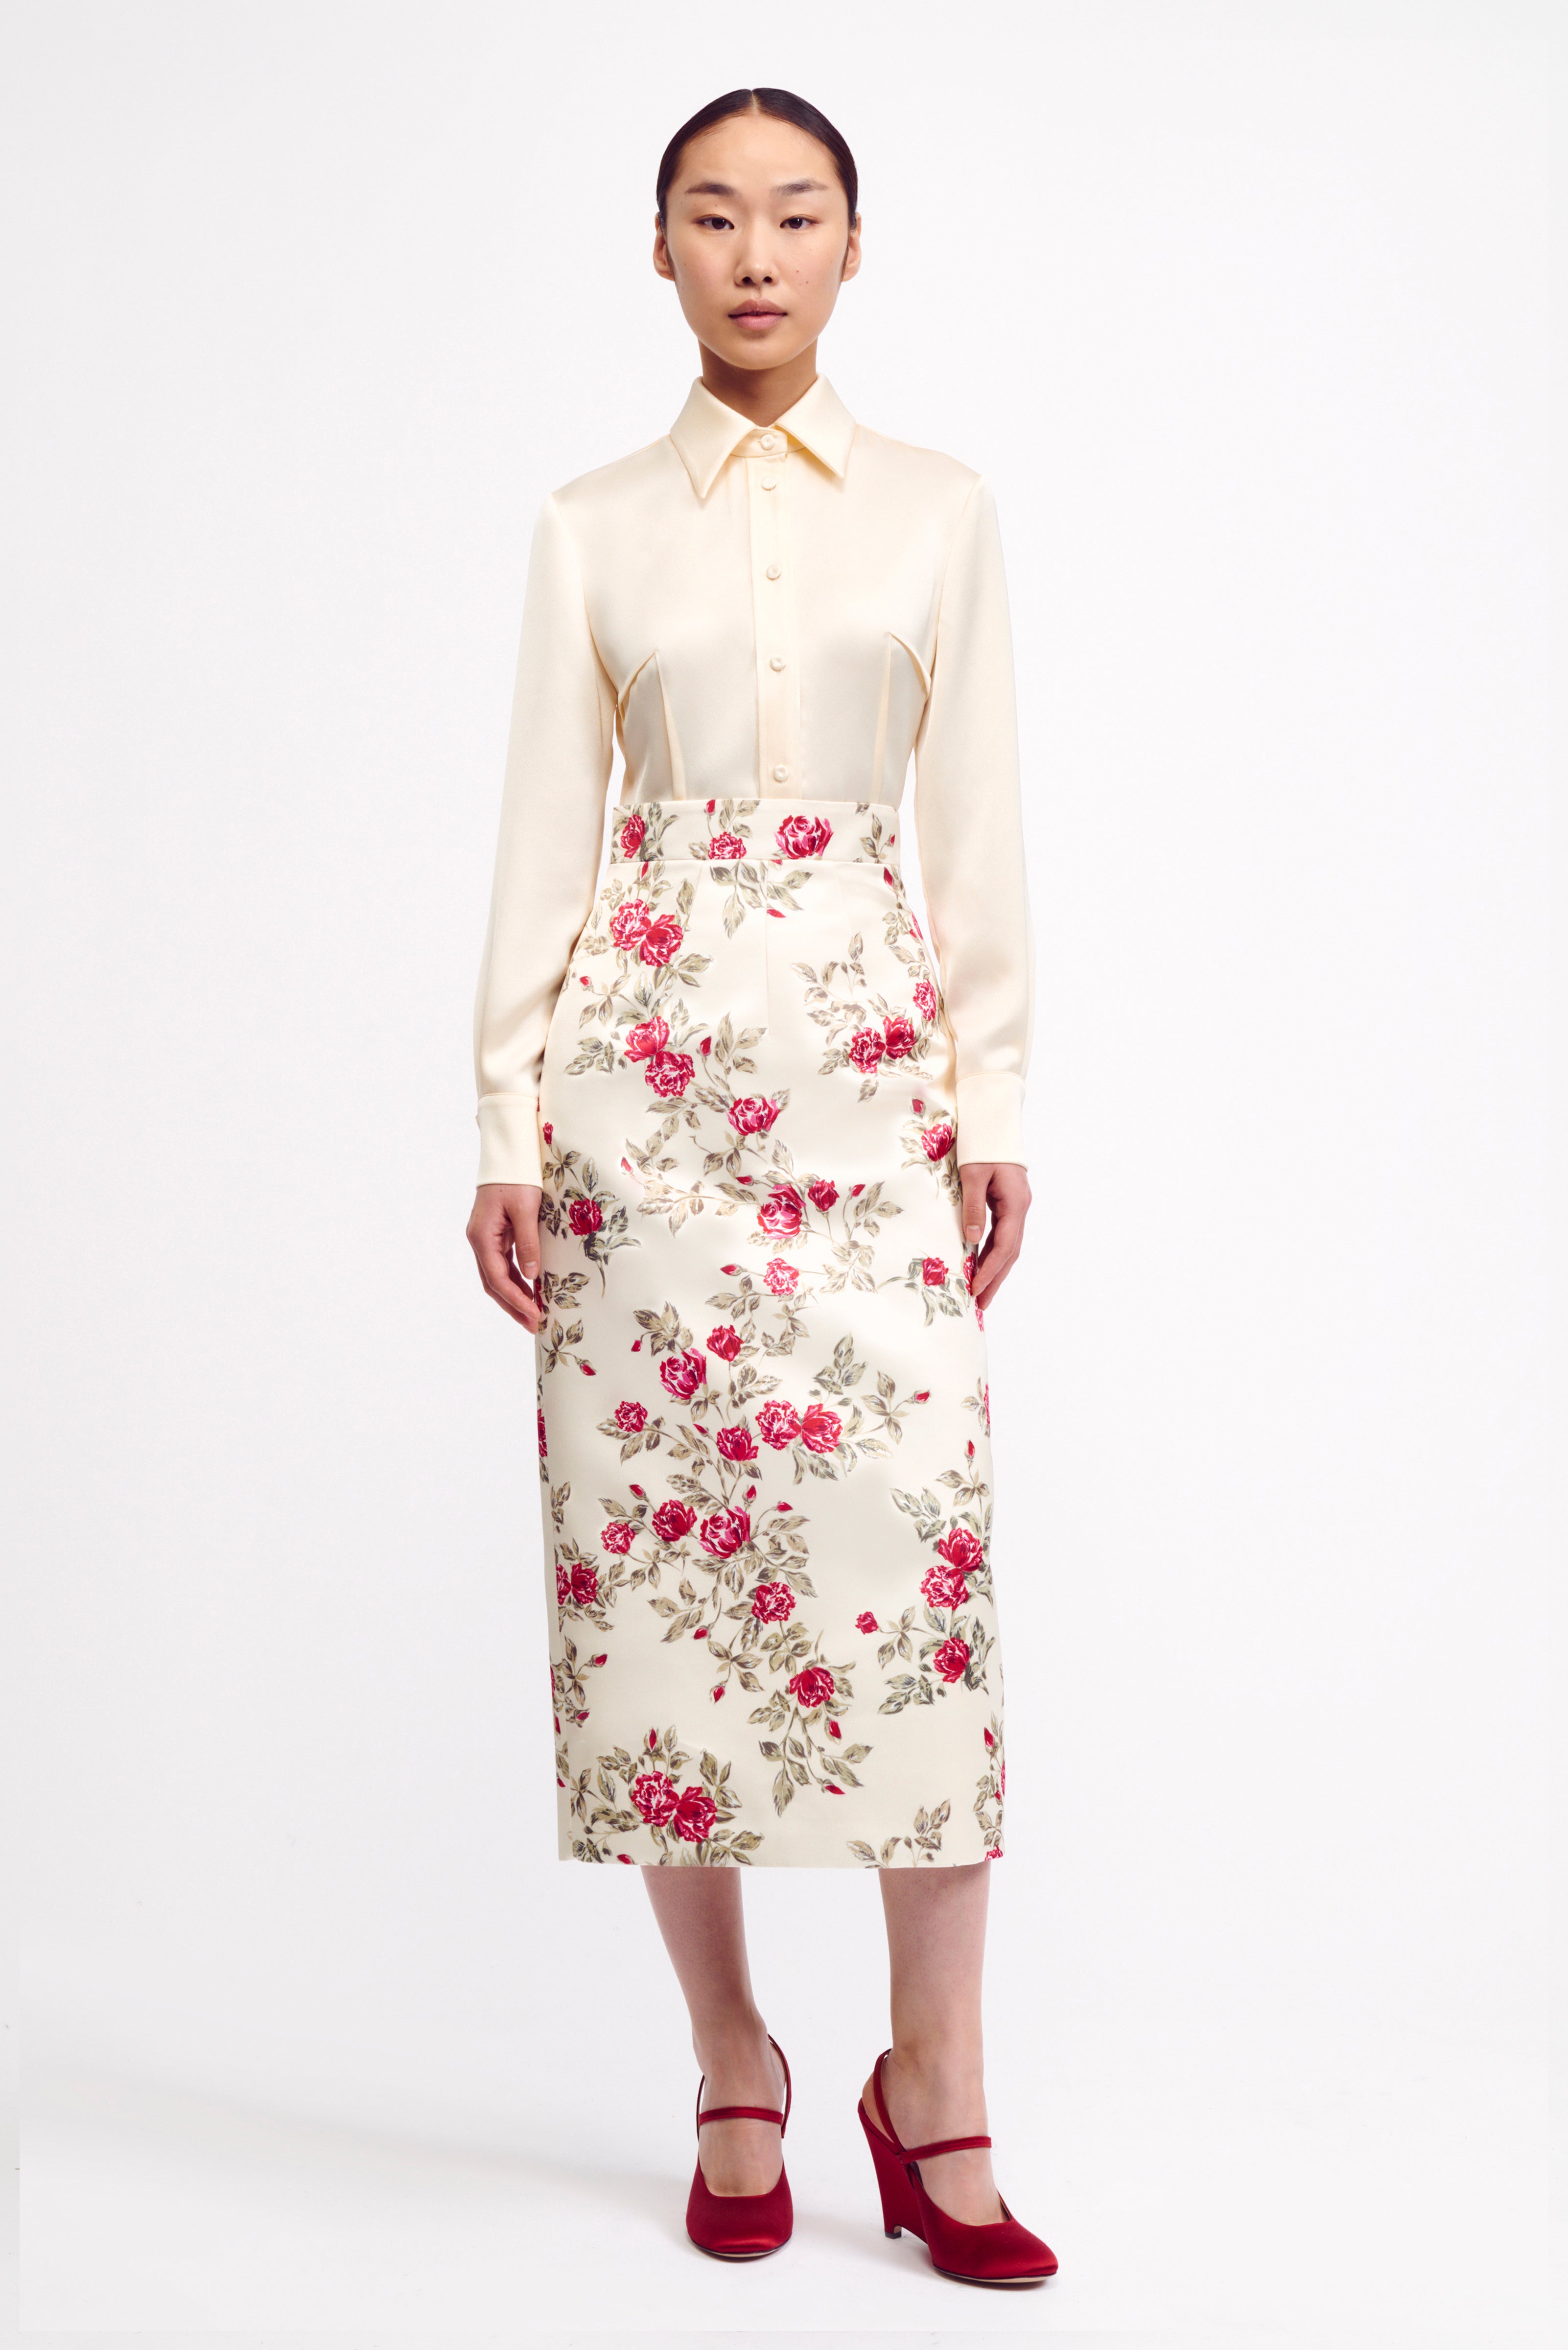 Lorinda Skirt in Red Rose Floral Printed Italian Duchess Satin | Emilia  Wickstead